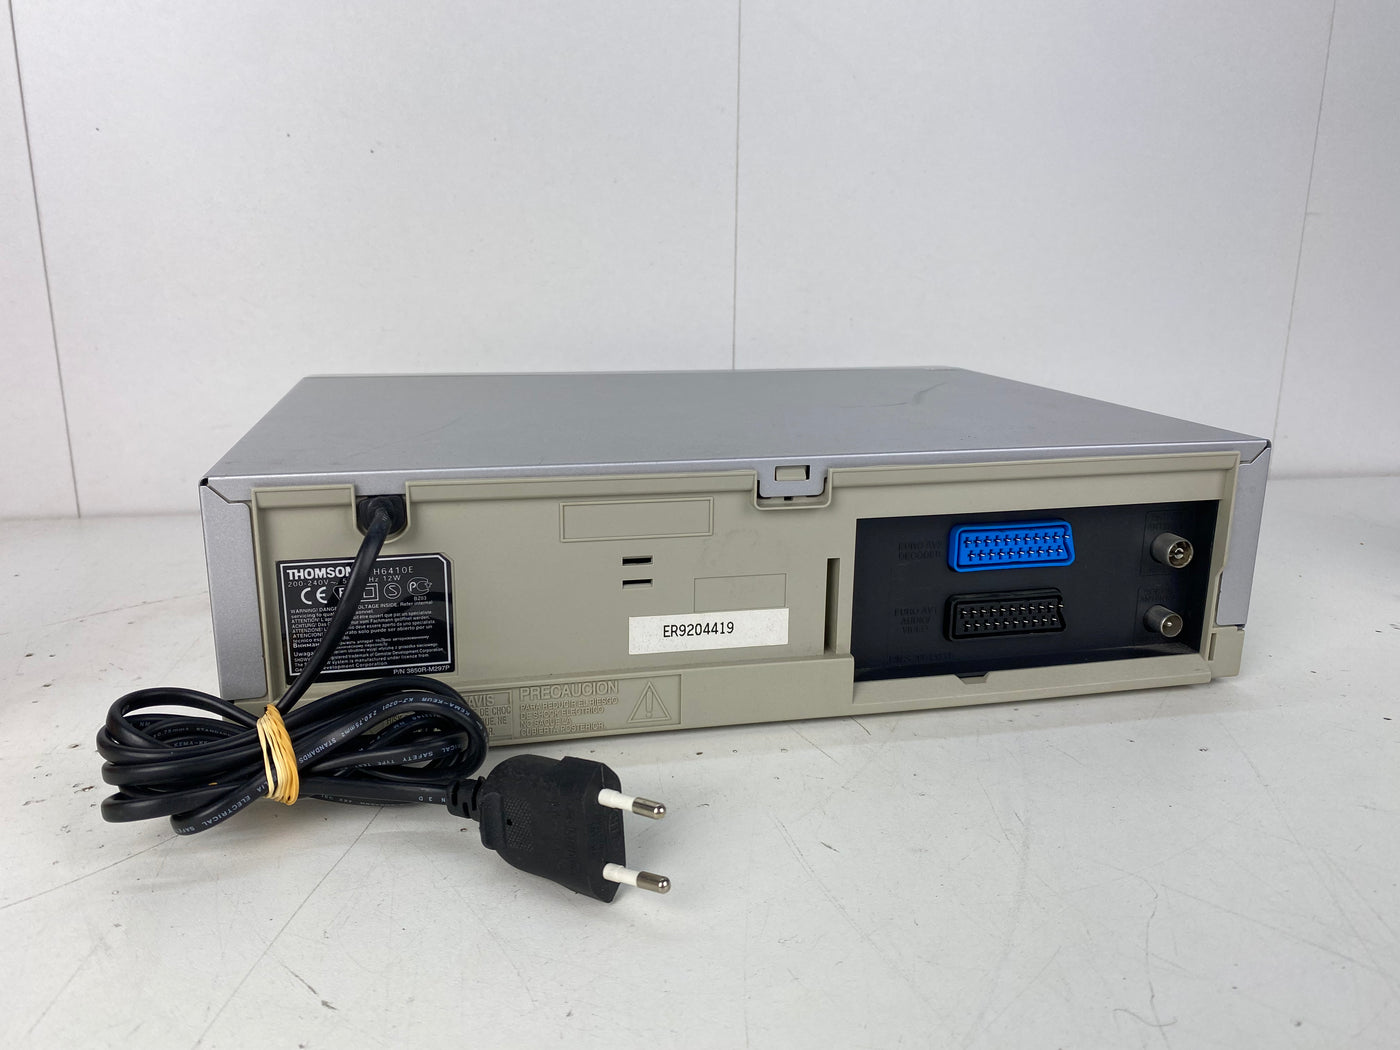 Thomson VTH6410E VHS Video Cassette Recorder